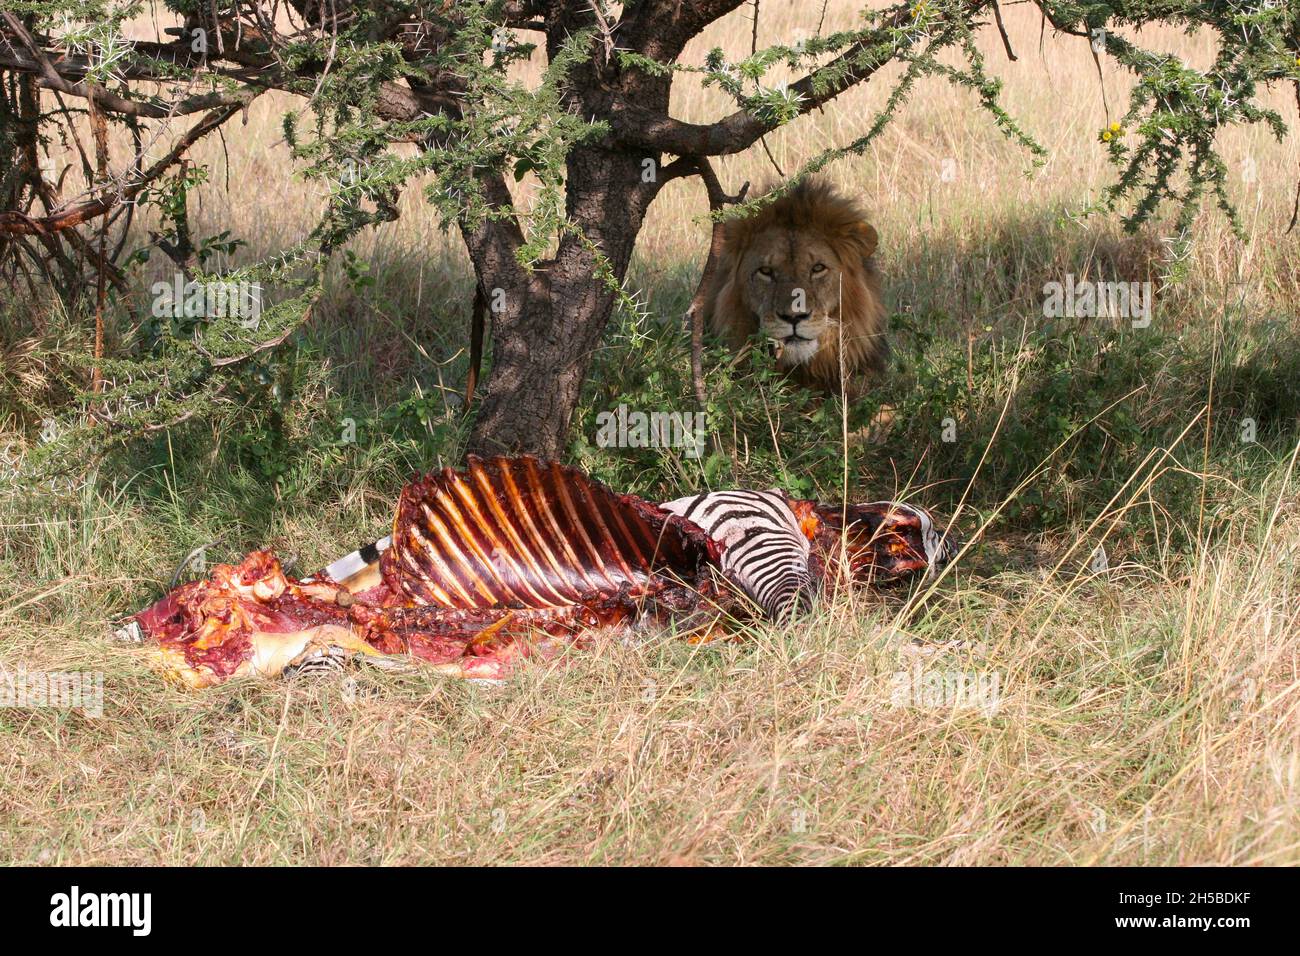 Lion resting next to a half eaten zebra carcass Photographed Masai Mara, Kenya Stock Photo